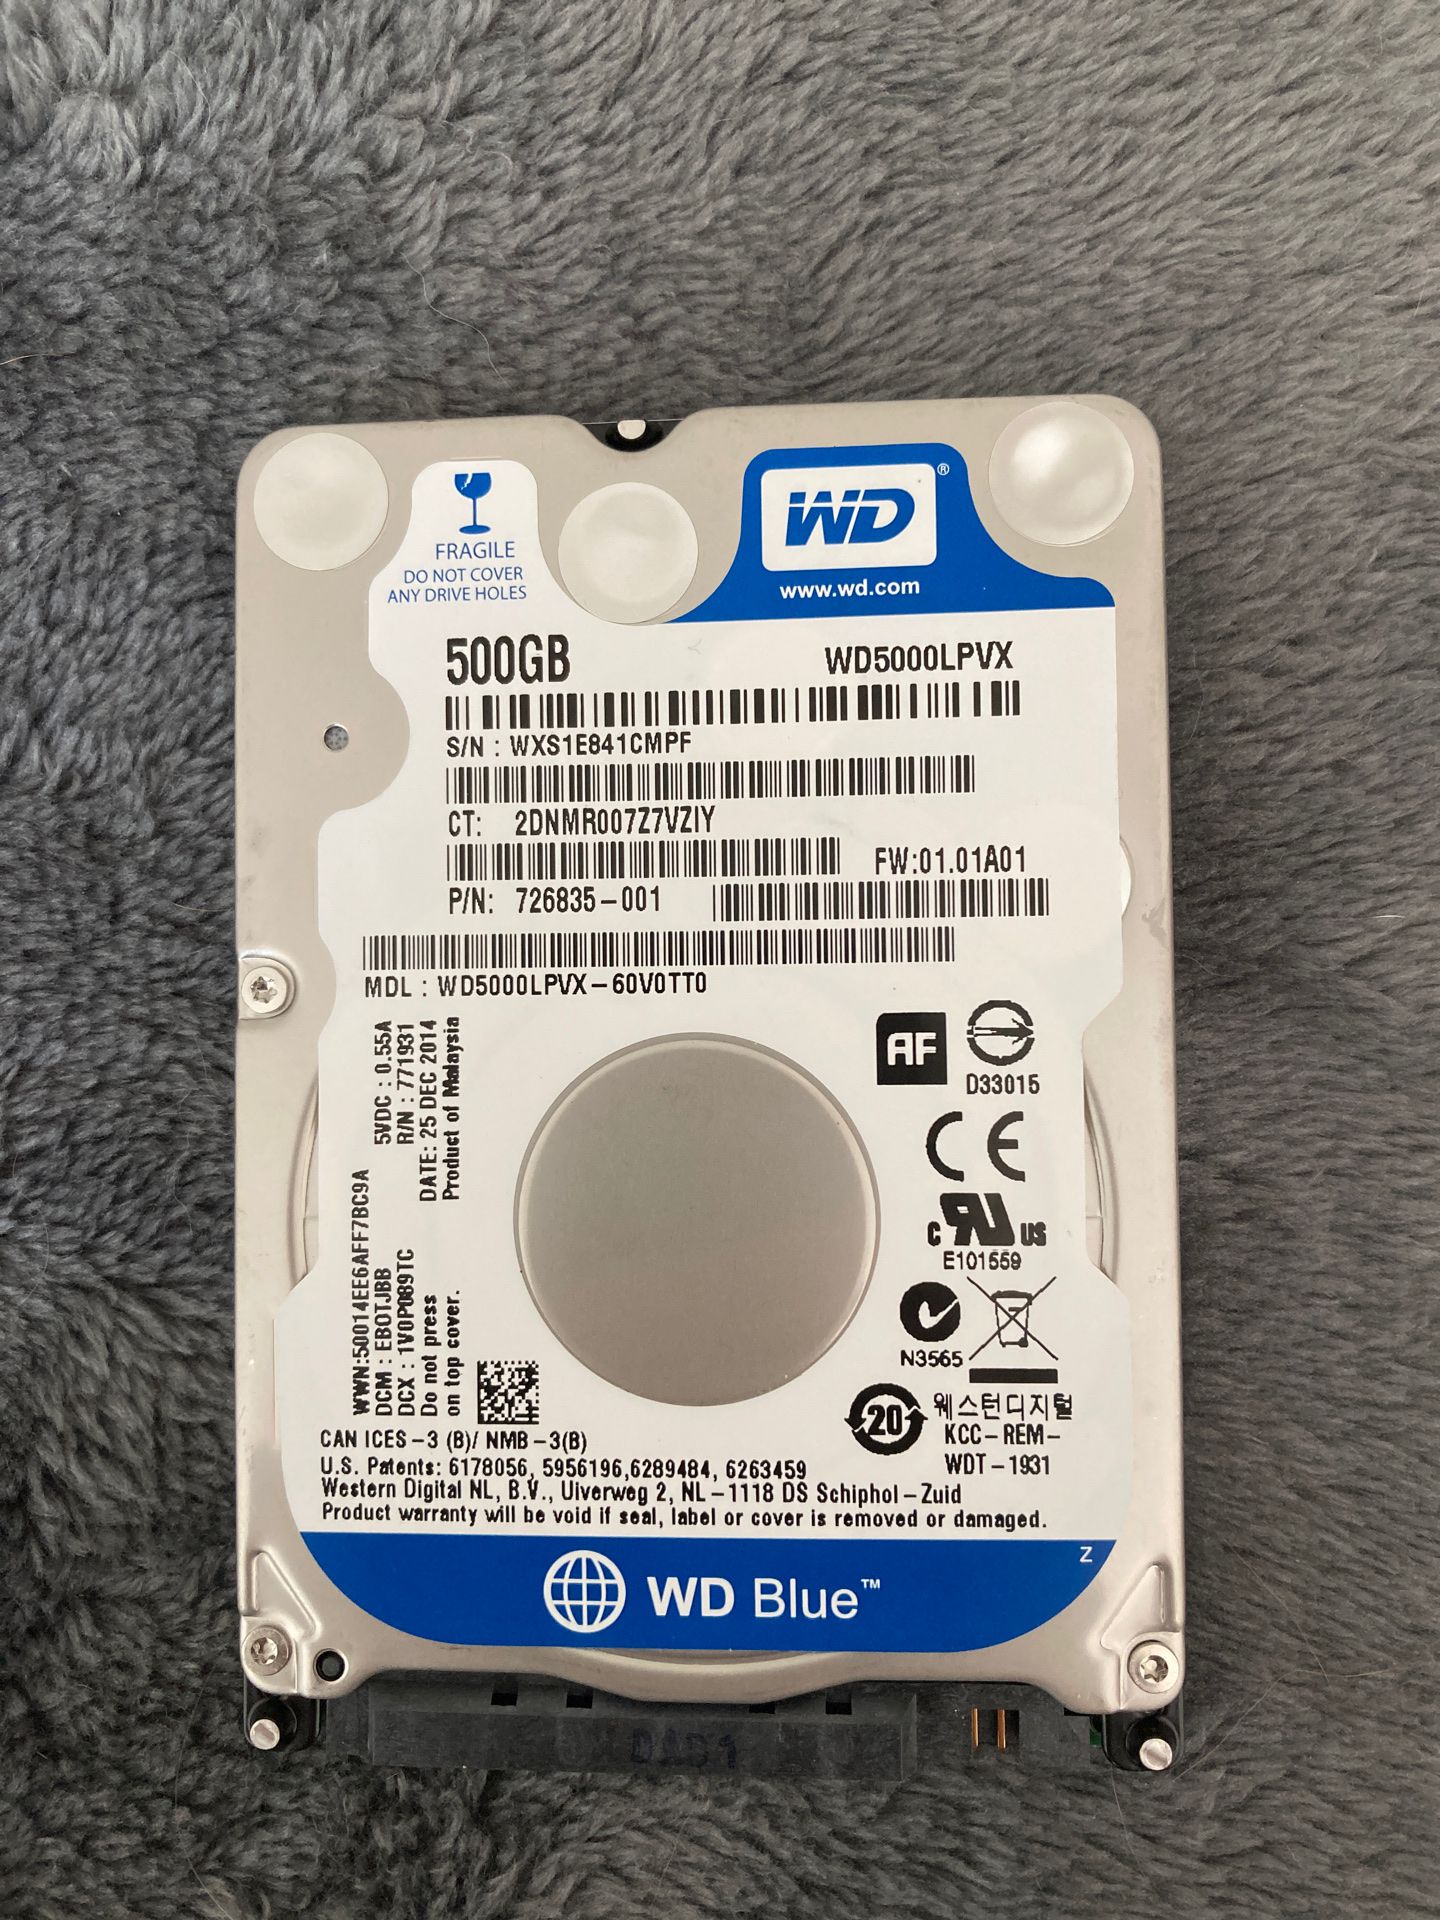 Western Digital WD Blue 500gb laptop hard drive - defective